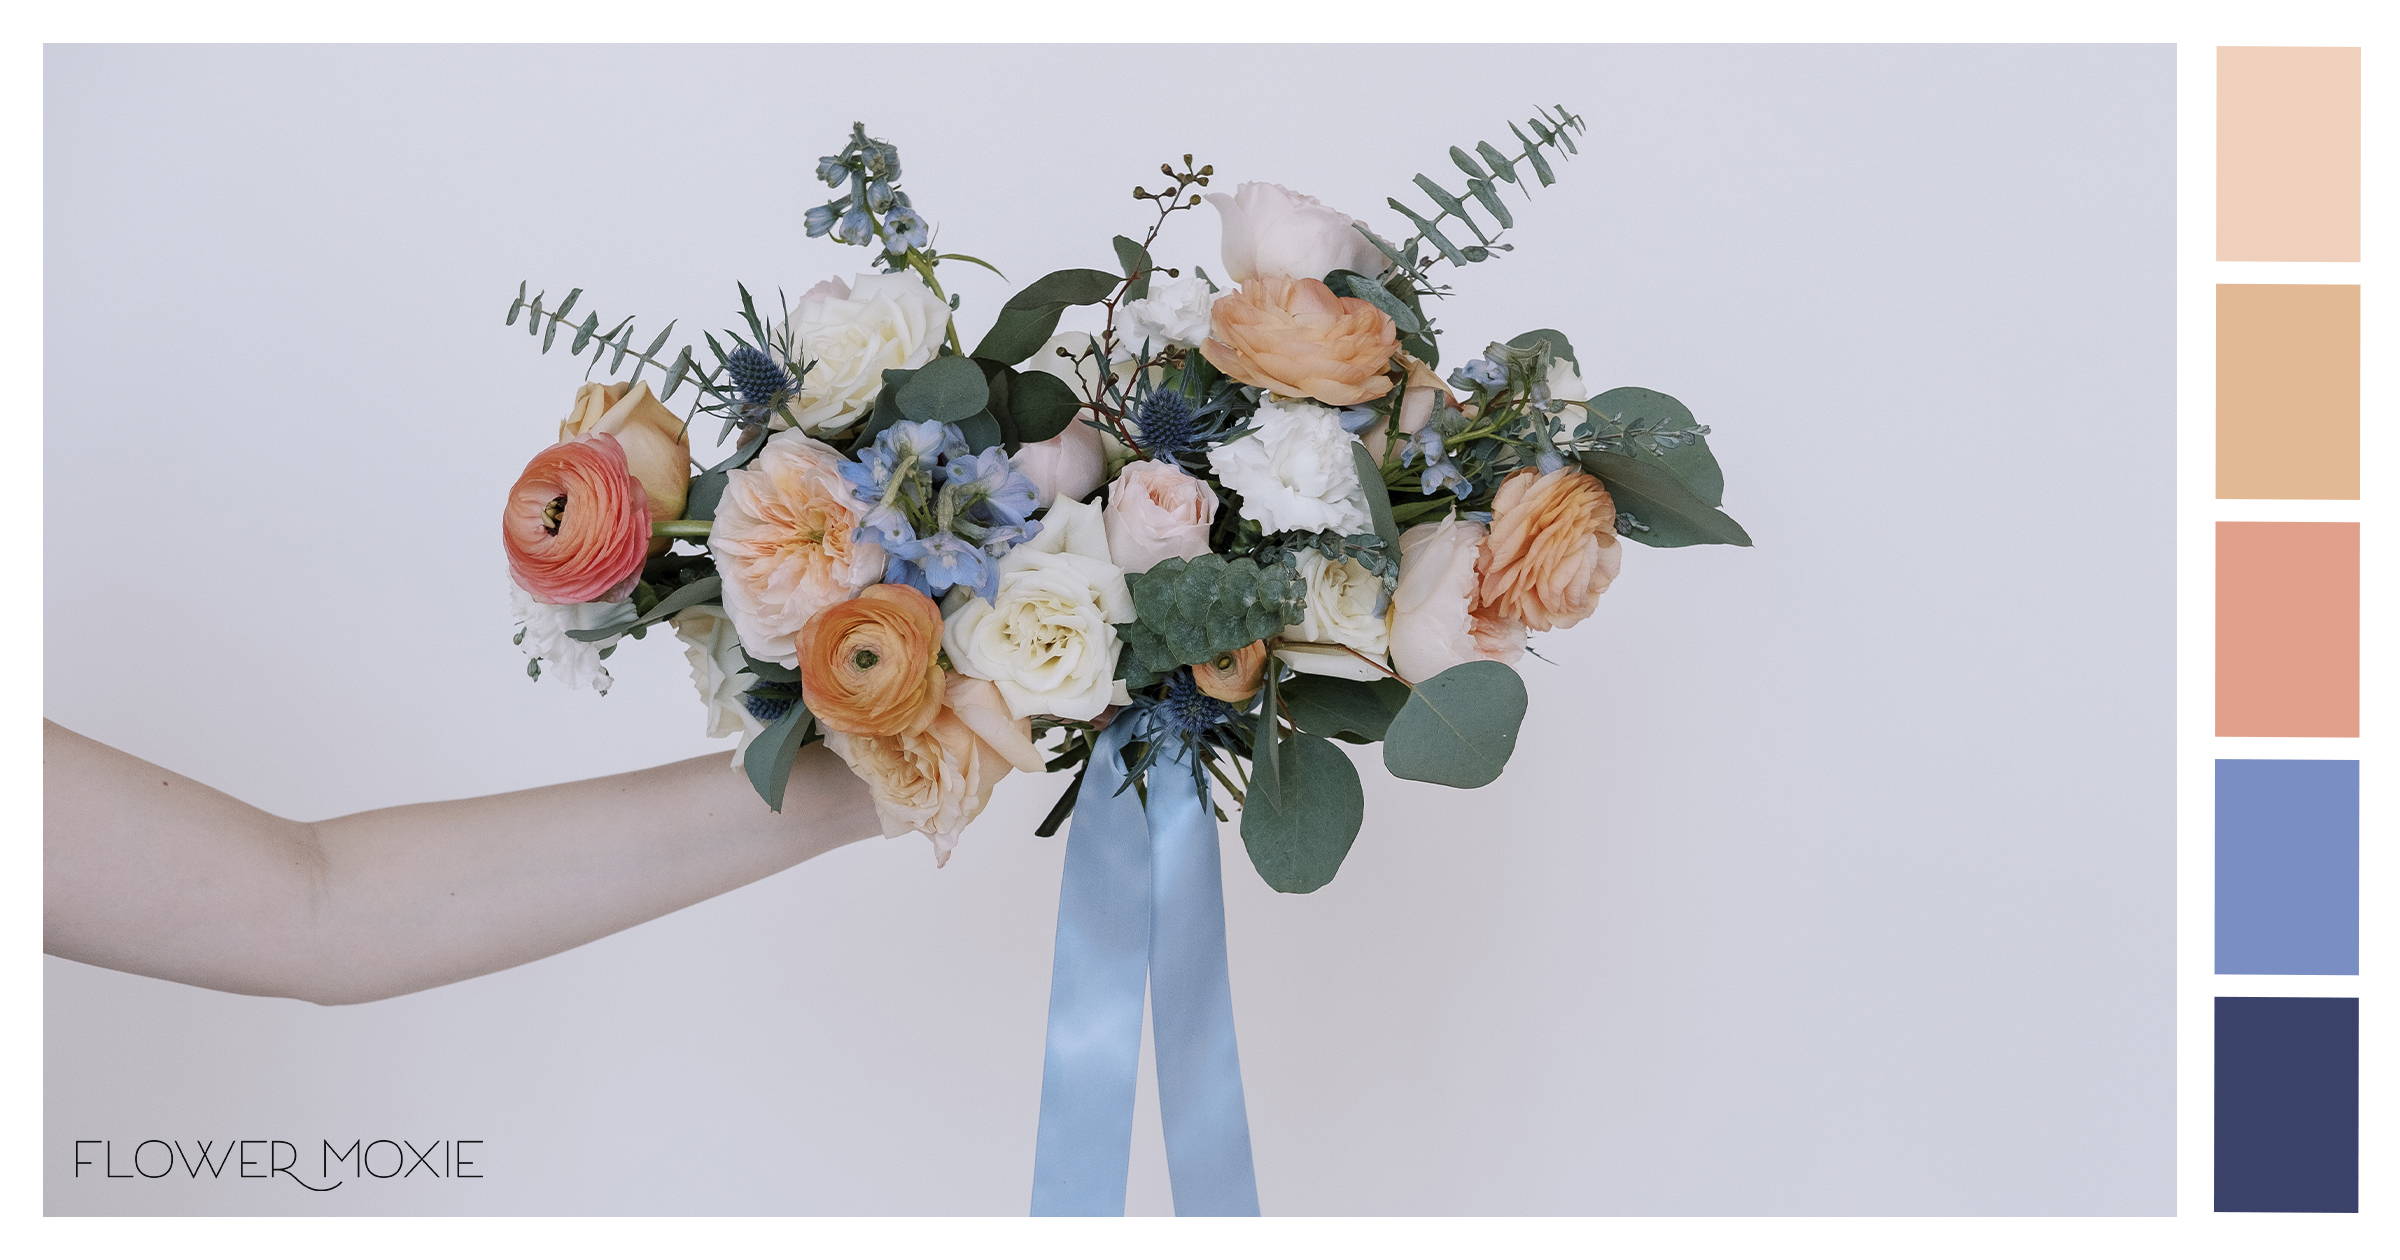 70 Mini Roses Buds  Light Blue  Silk Wedding Flowers Centerpieces Bridal Bouquet 